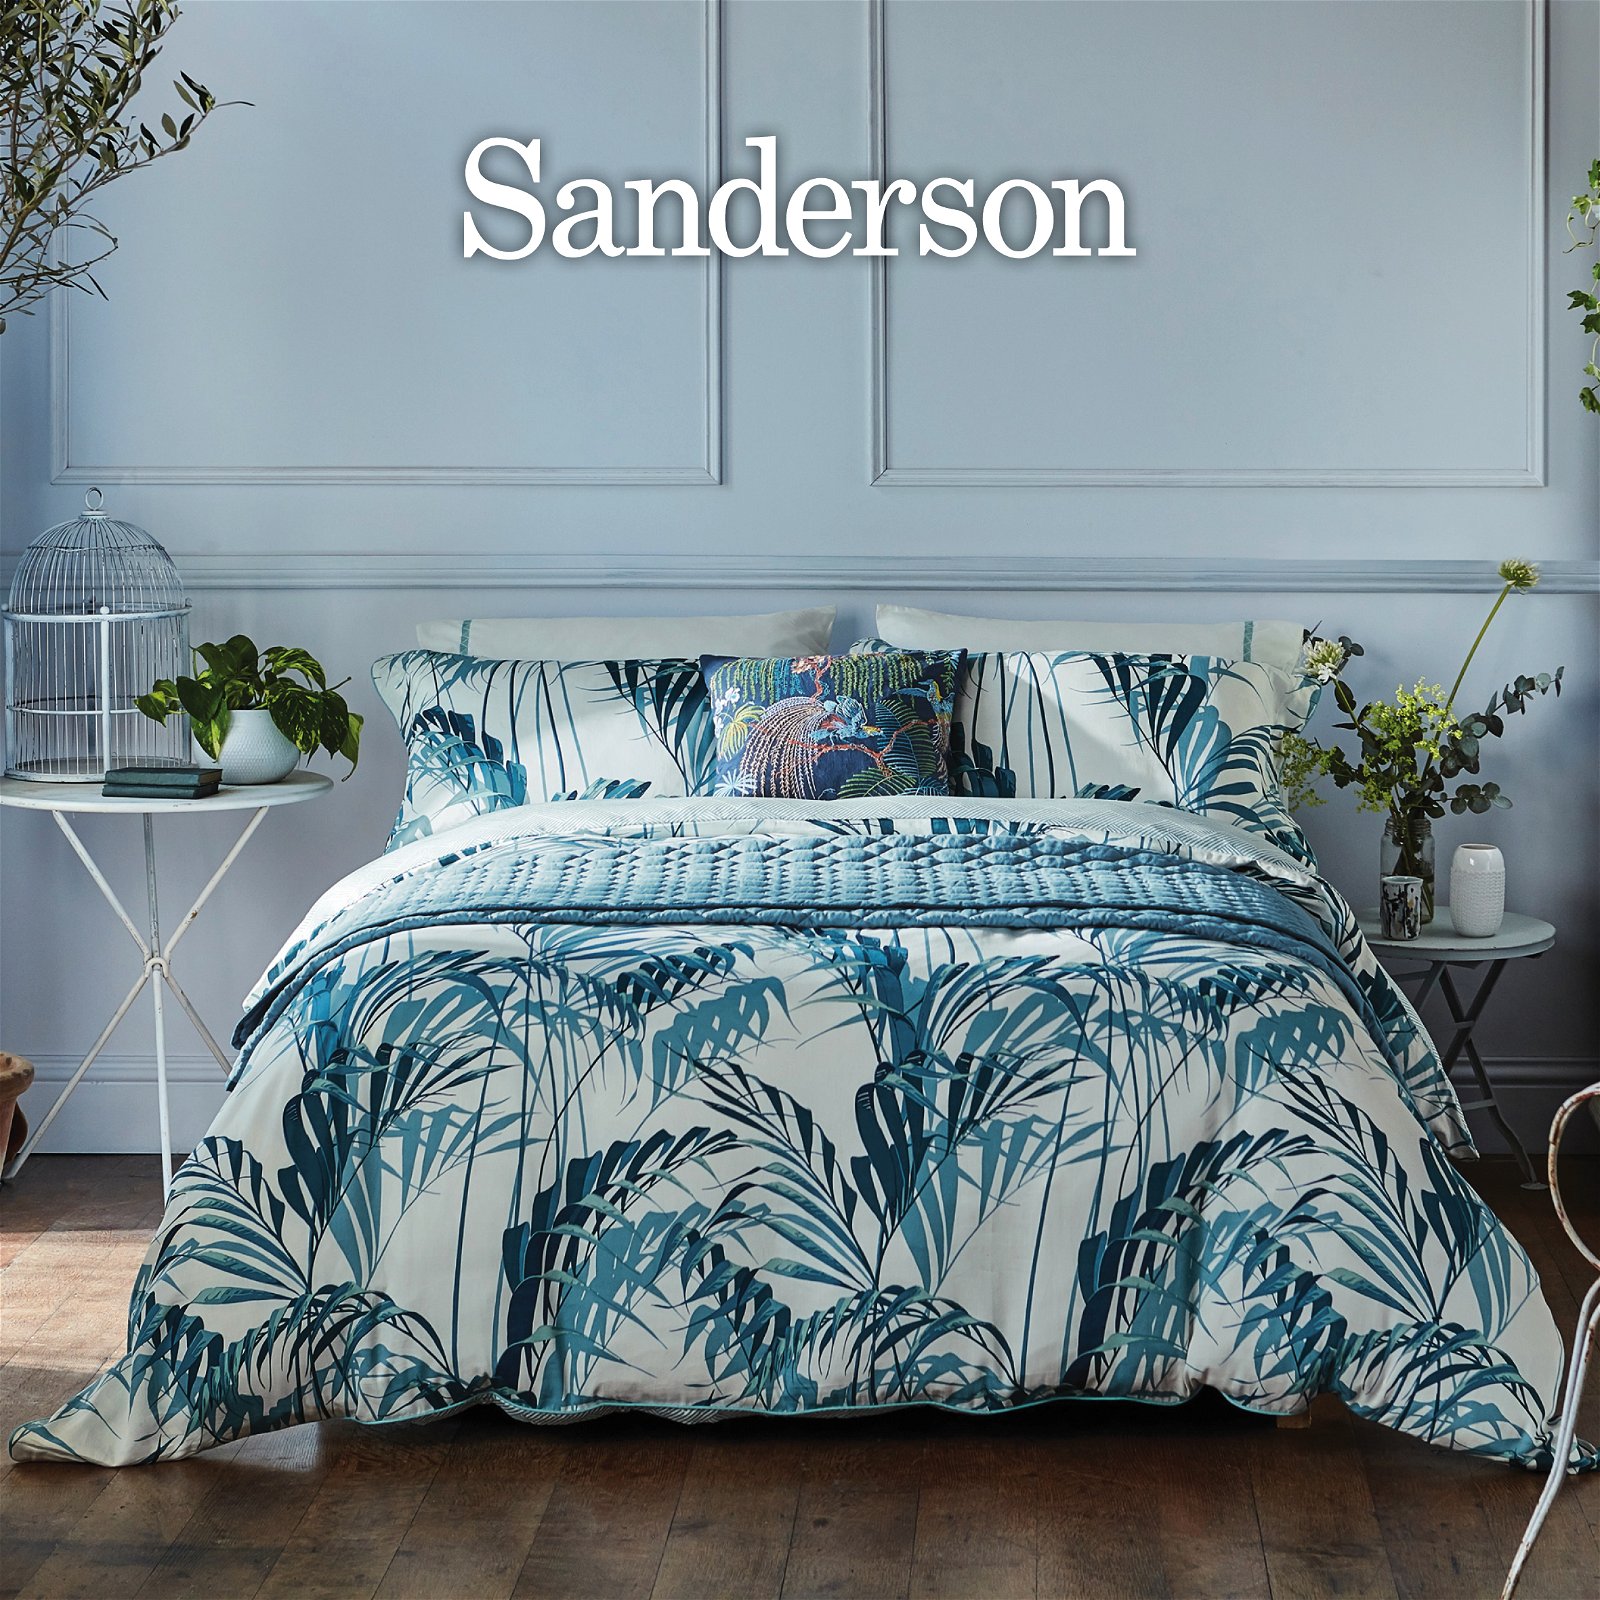 Sanderson Palm House Bedding in Eucalyptus